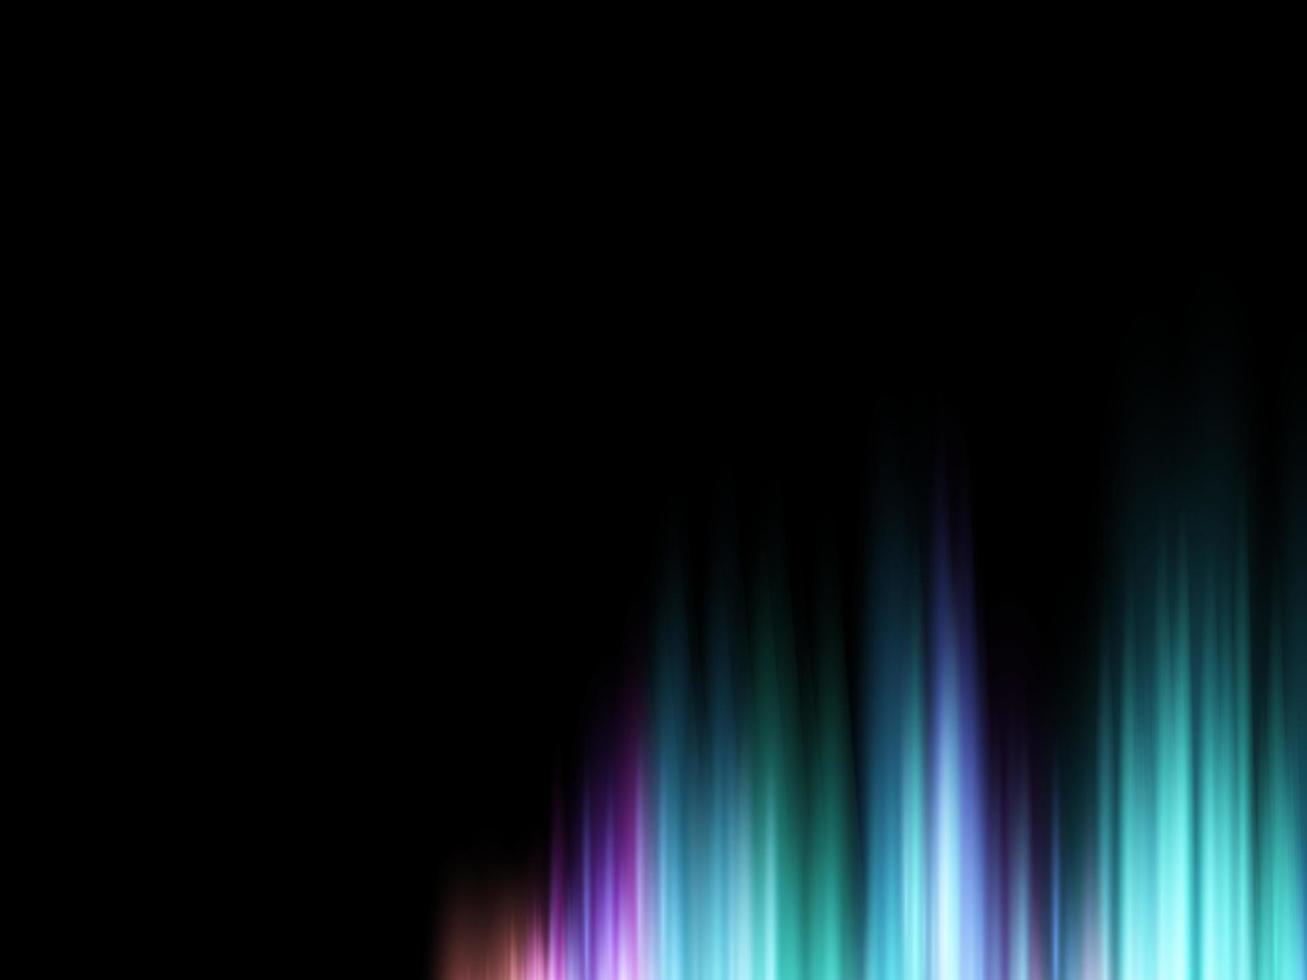 fundo brilhante vetor abstrato com onda sonora colorida de brilho